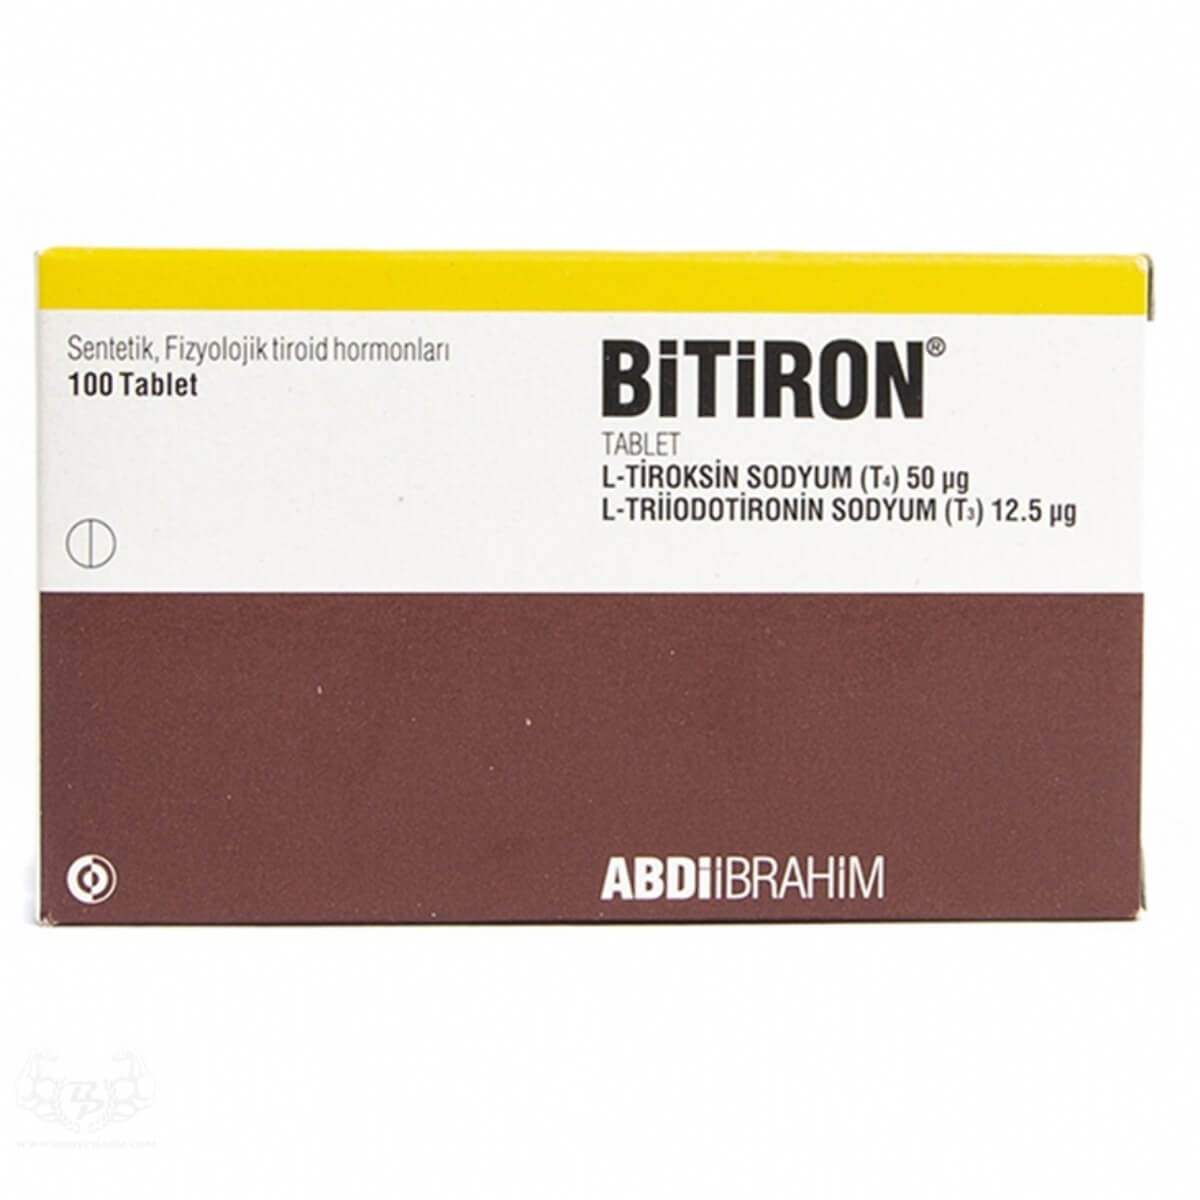 Bitiron - image 0